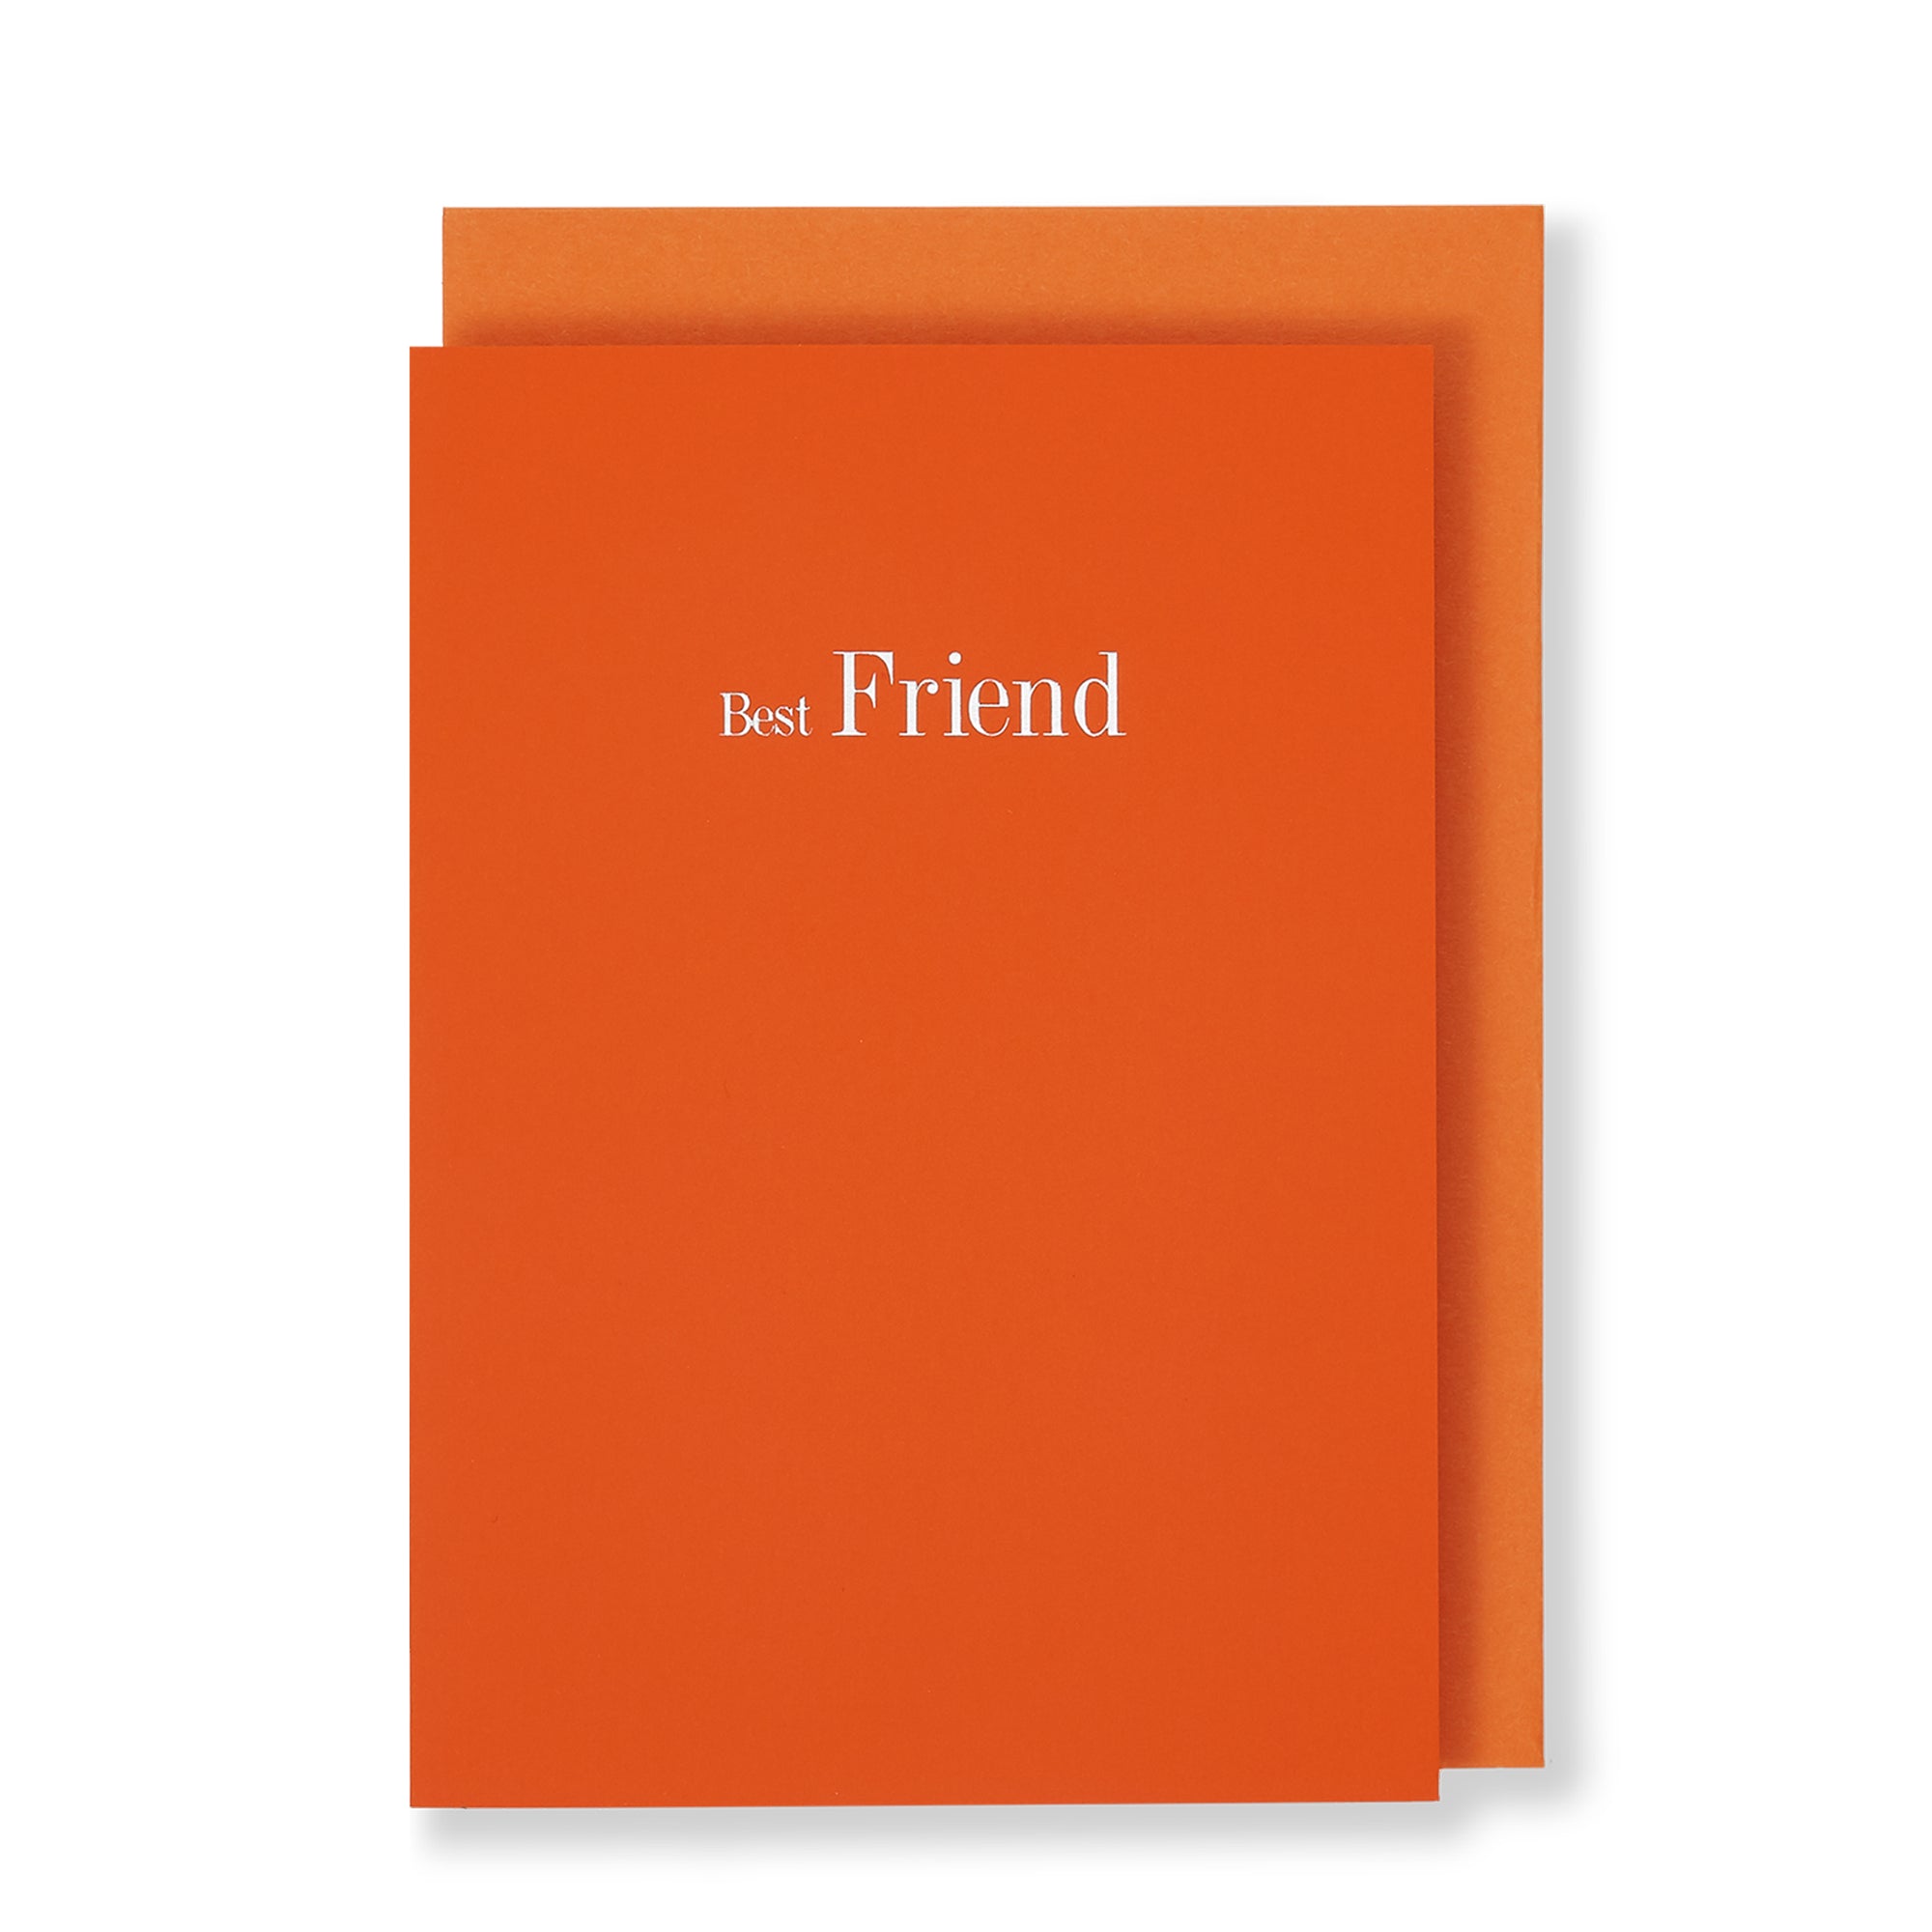 Best Friend Greeting Card in Orange, Front